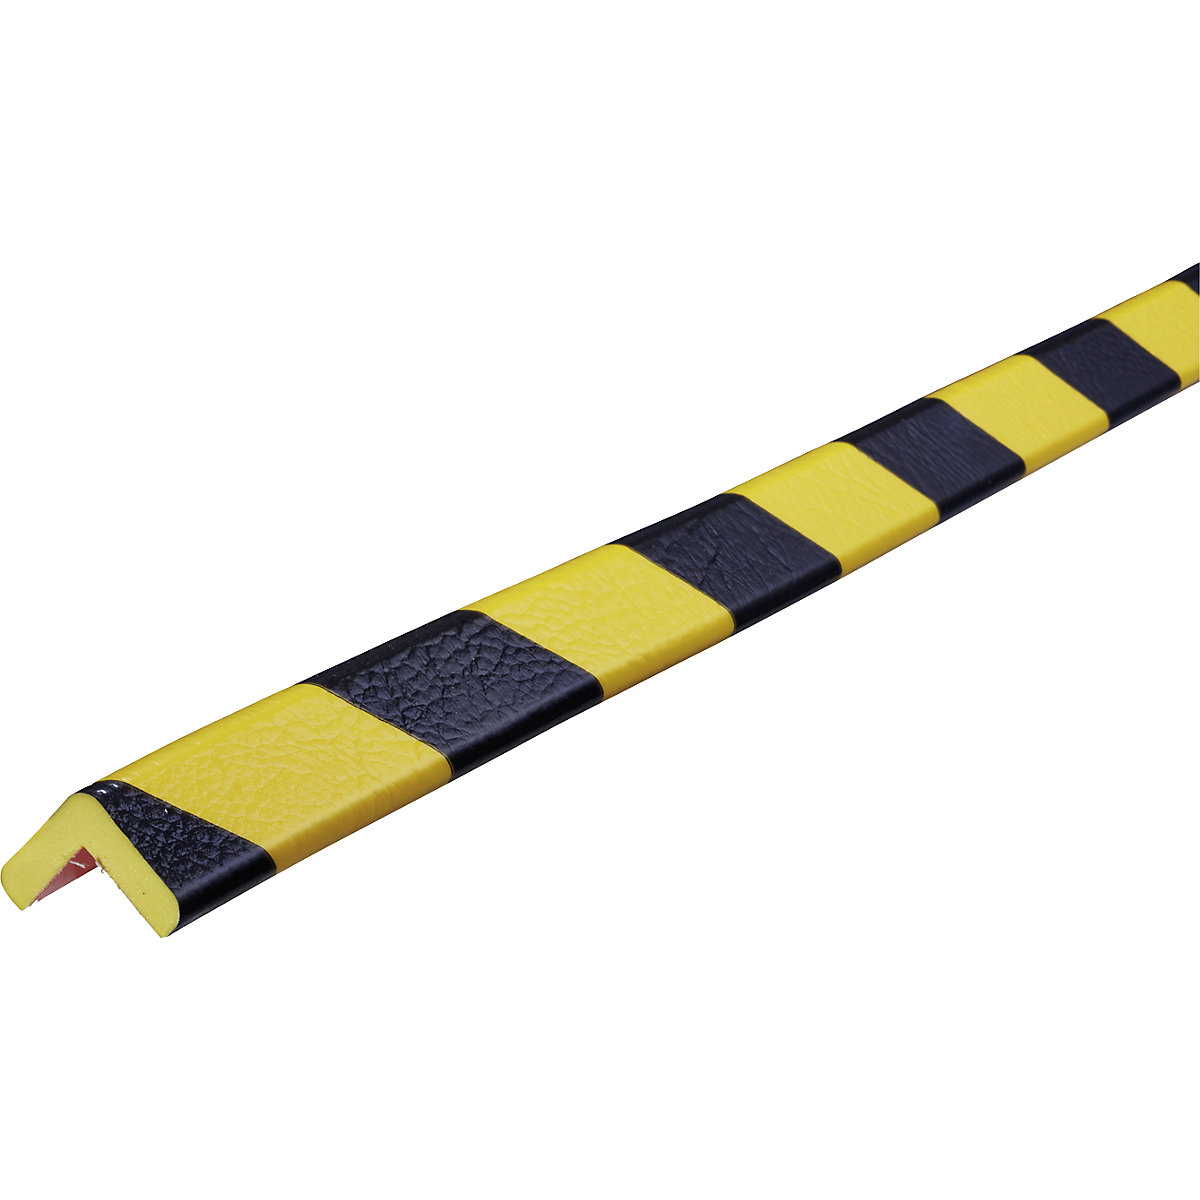 Knuffi®-hoekbescherming – SHG, type E, stuk van 1 m, zwart/geel-14